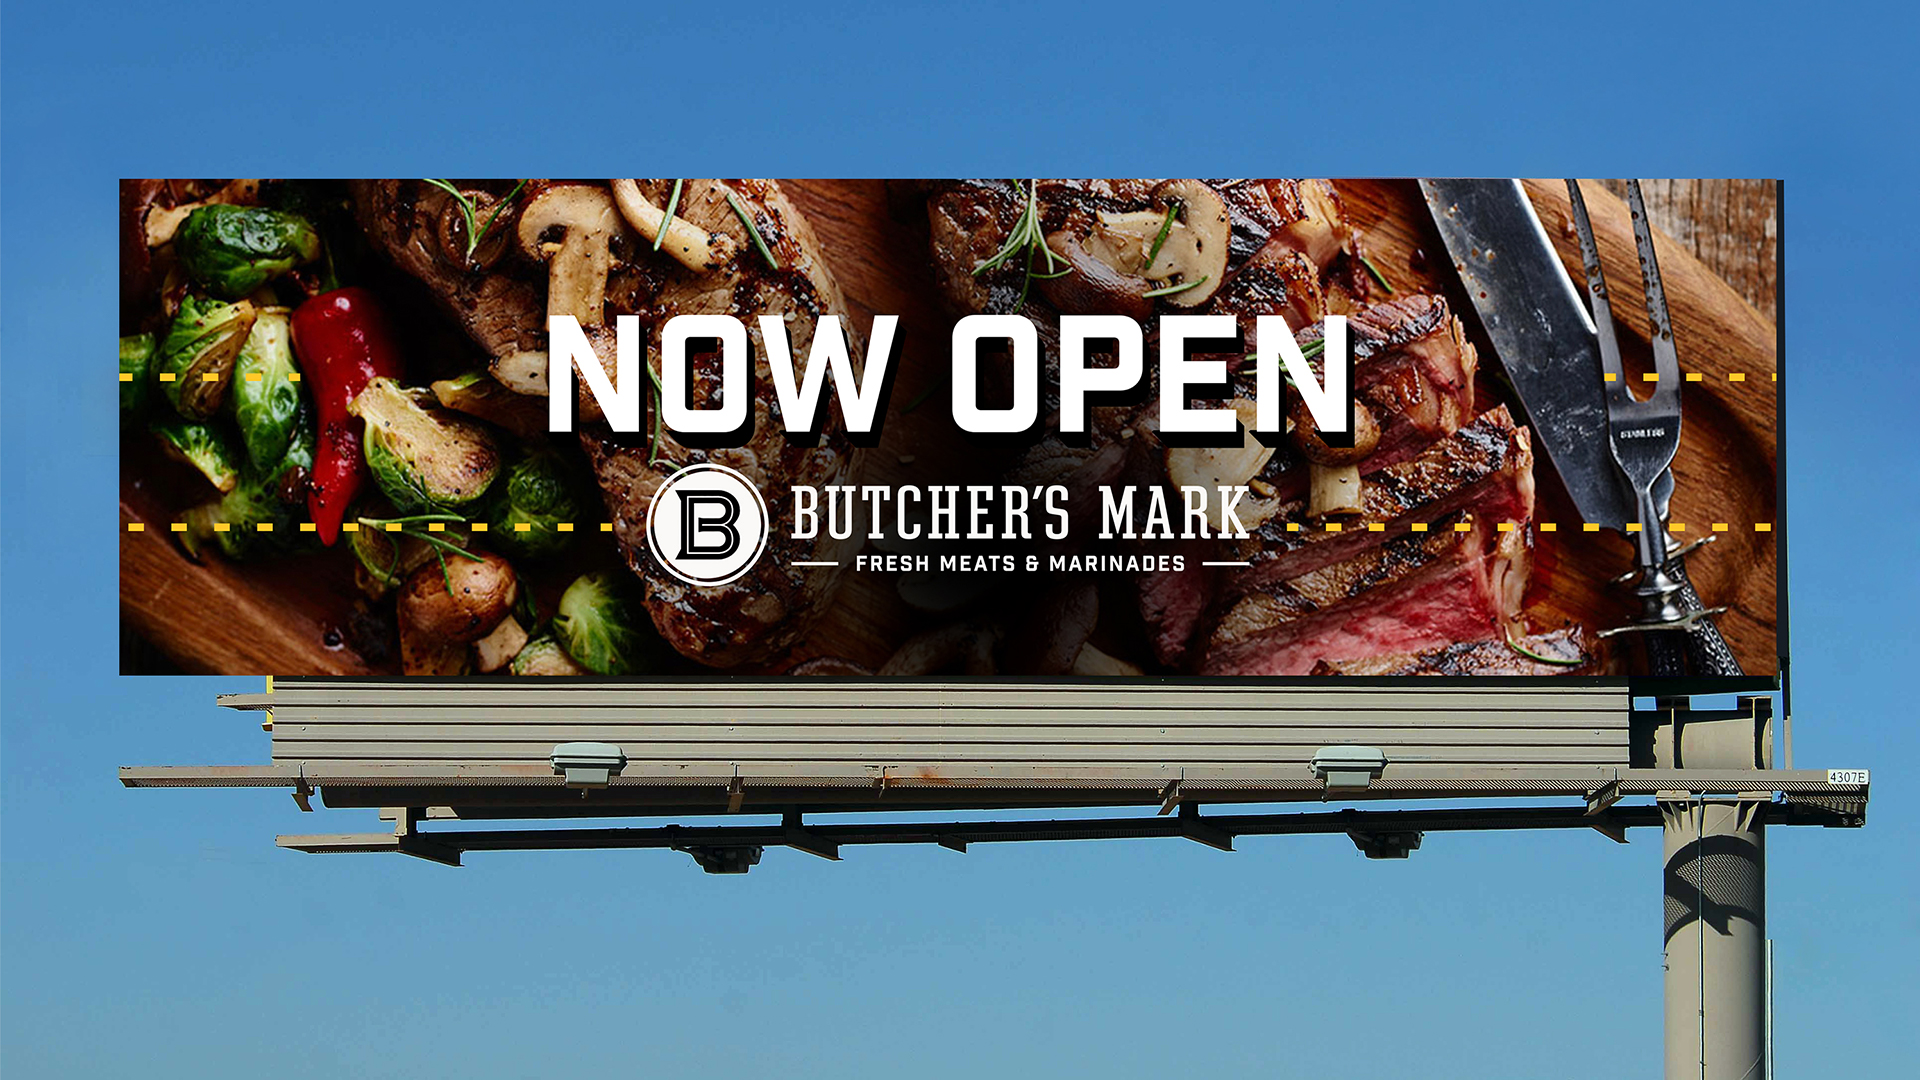 butcher's mark billboard mockup now open